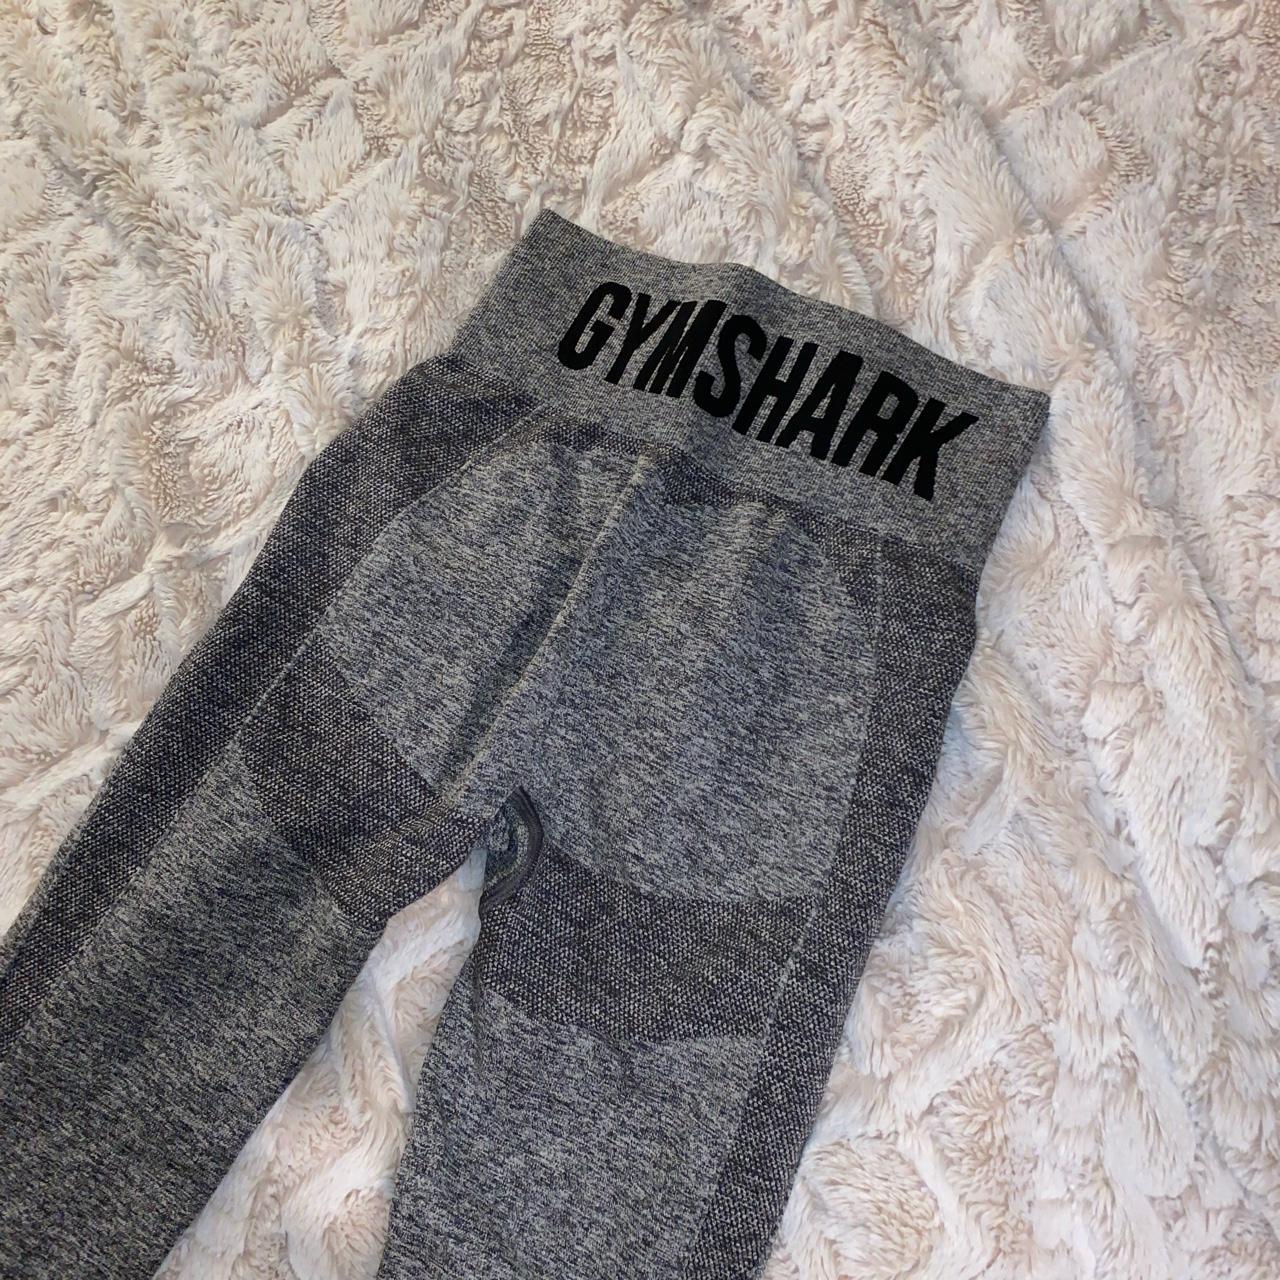 Gymshark Flex High Waisted Leggings - Black, size - Depop